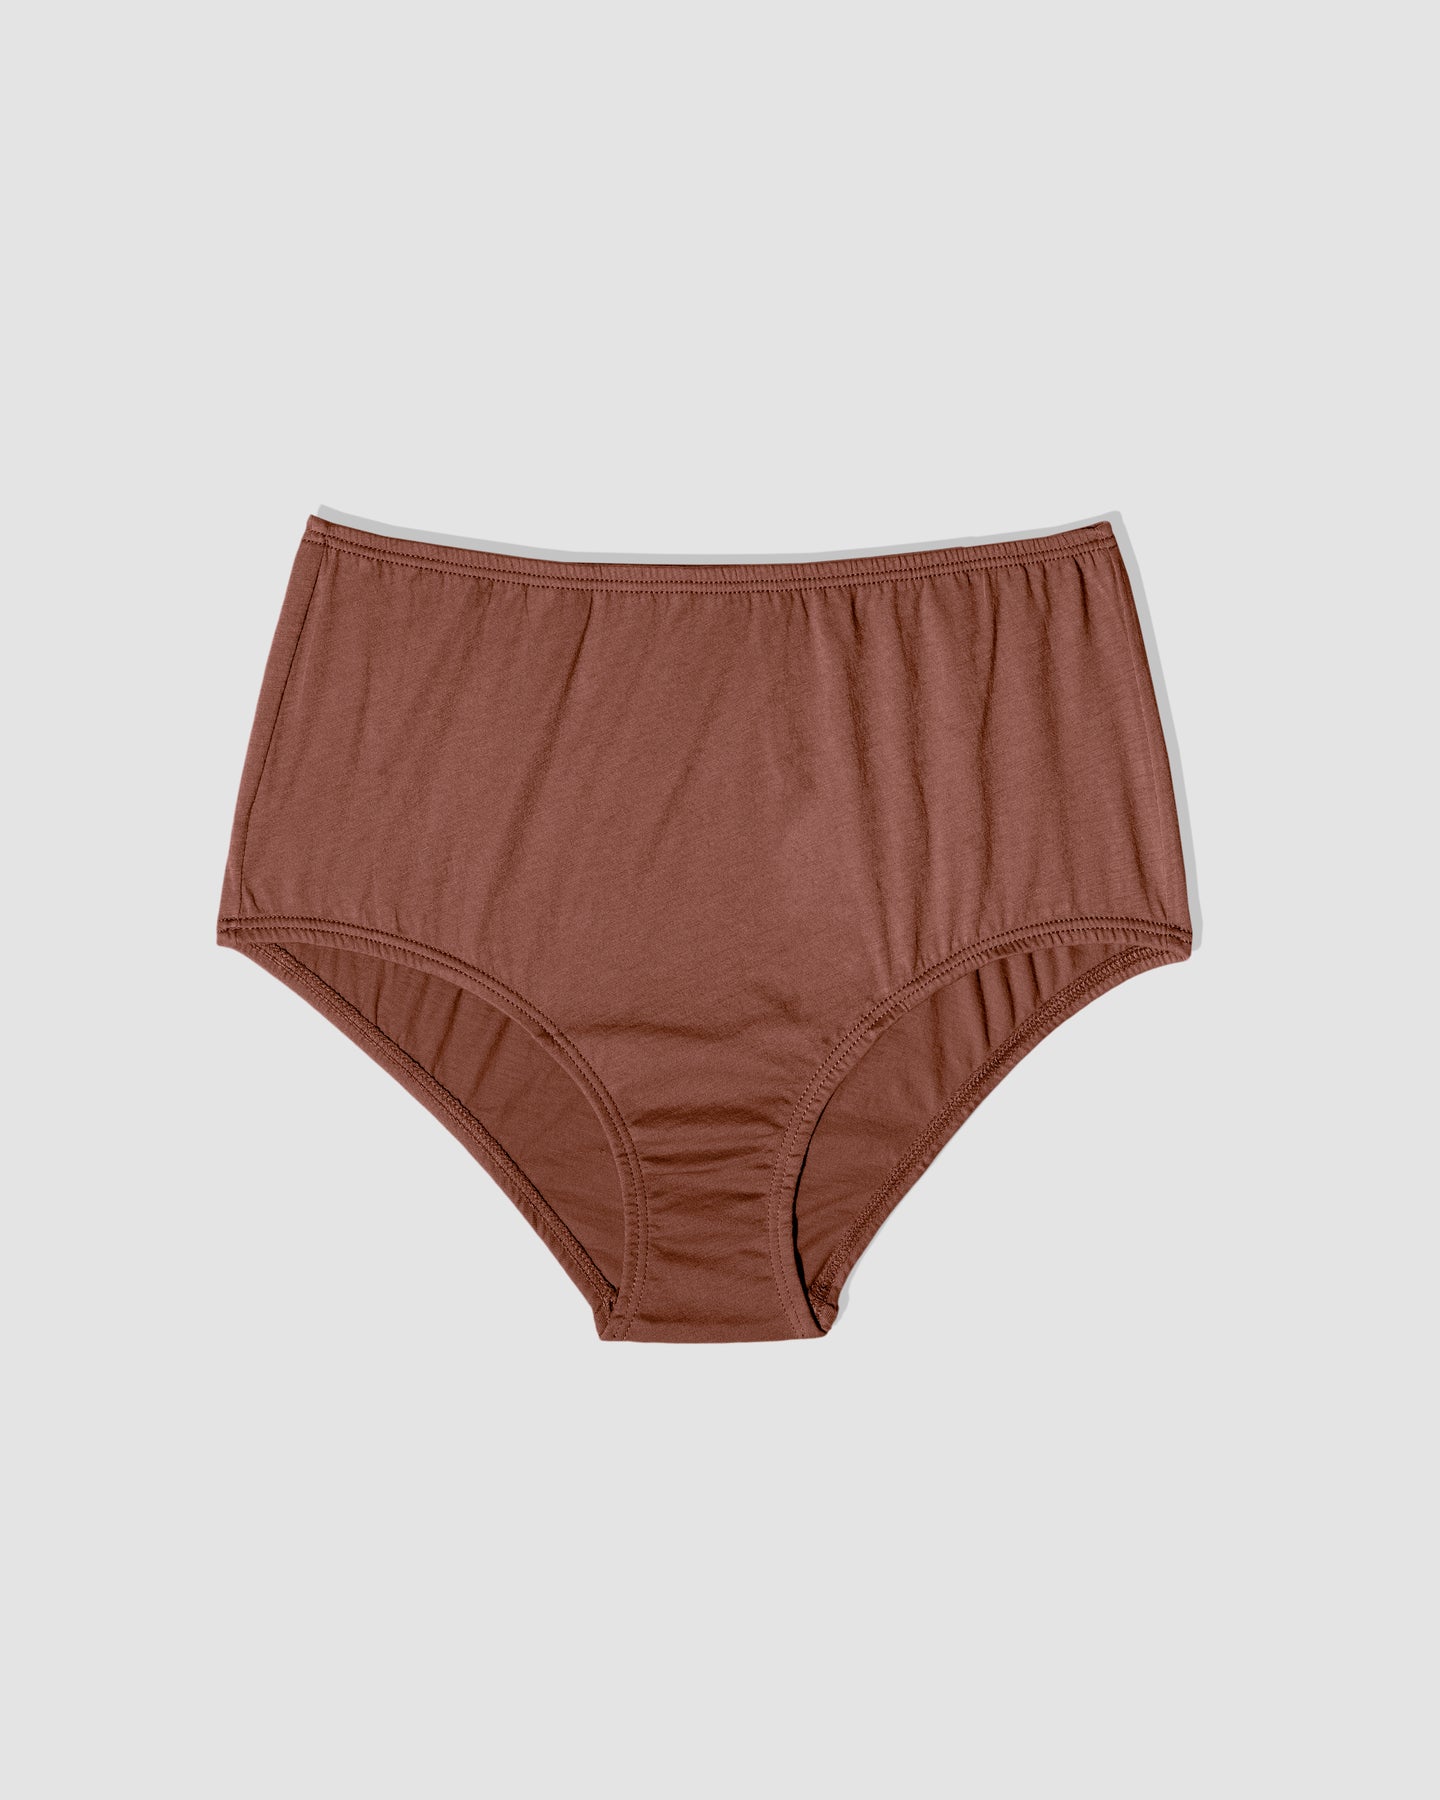 100% Cotton Boyshorts Panties for Women High Waisted Underwear